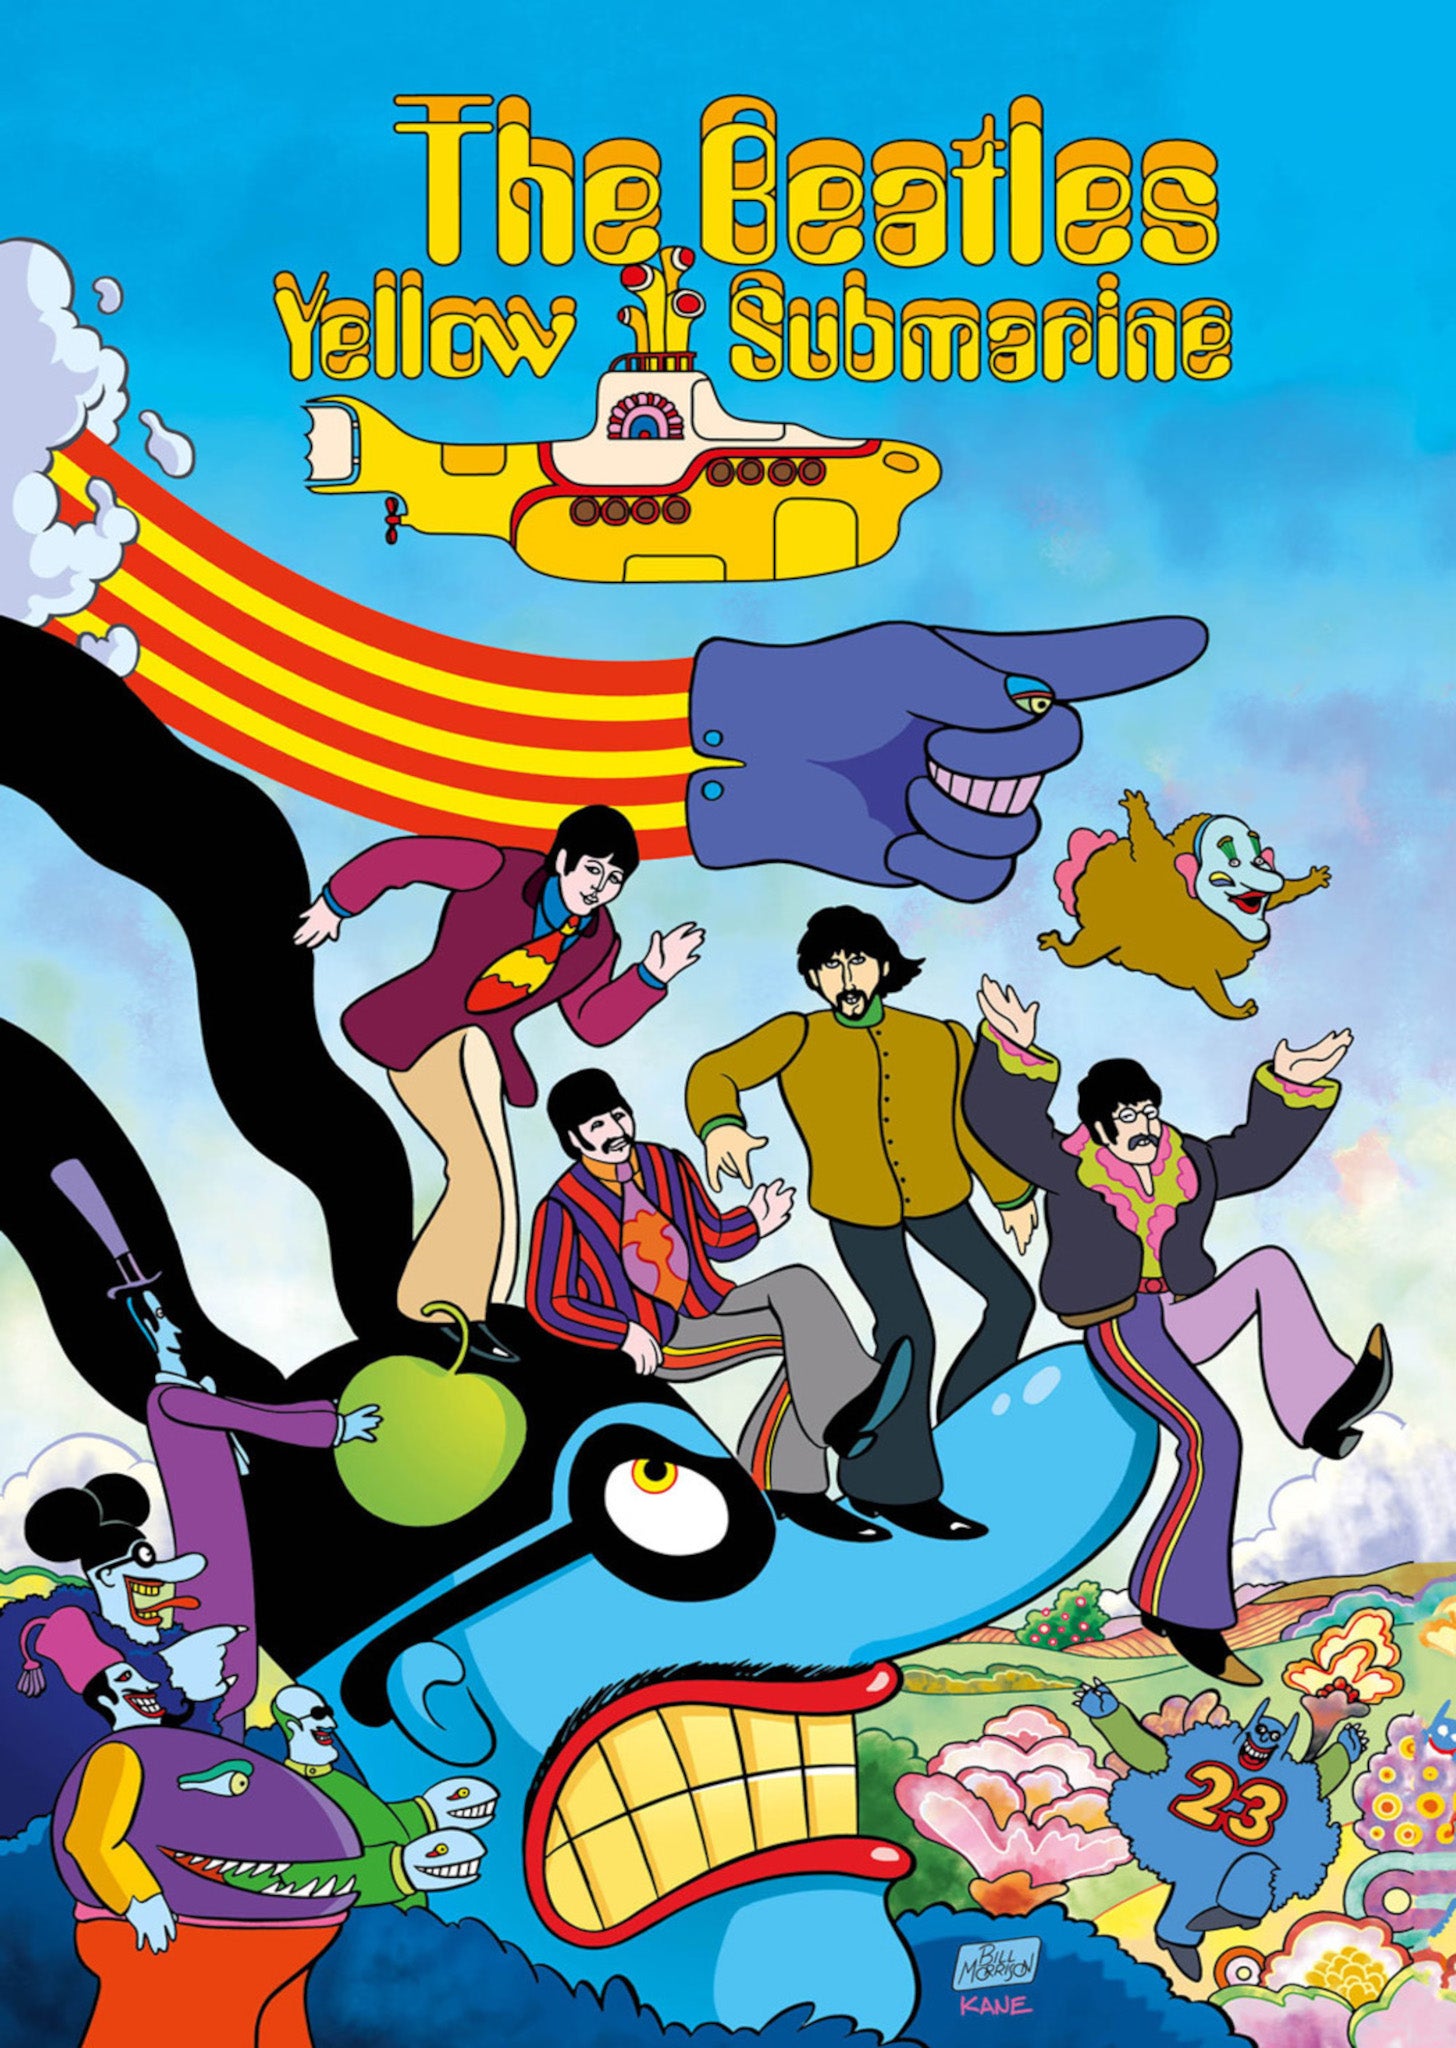 The Beatles - Yellow Submarine (Blue) - A4 Mini Print/Poster